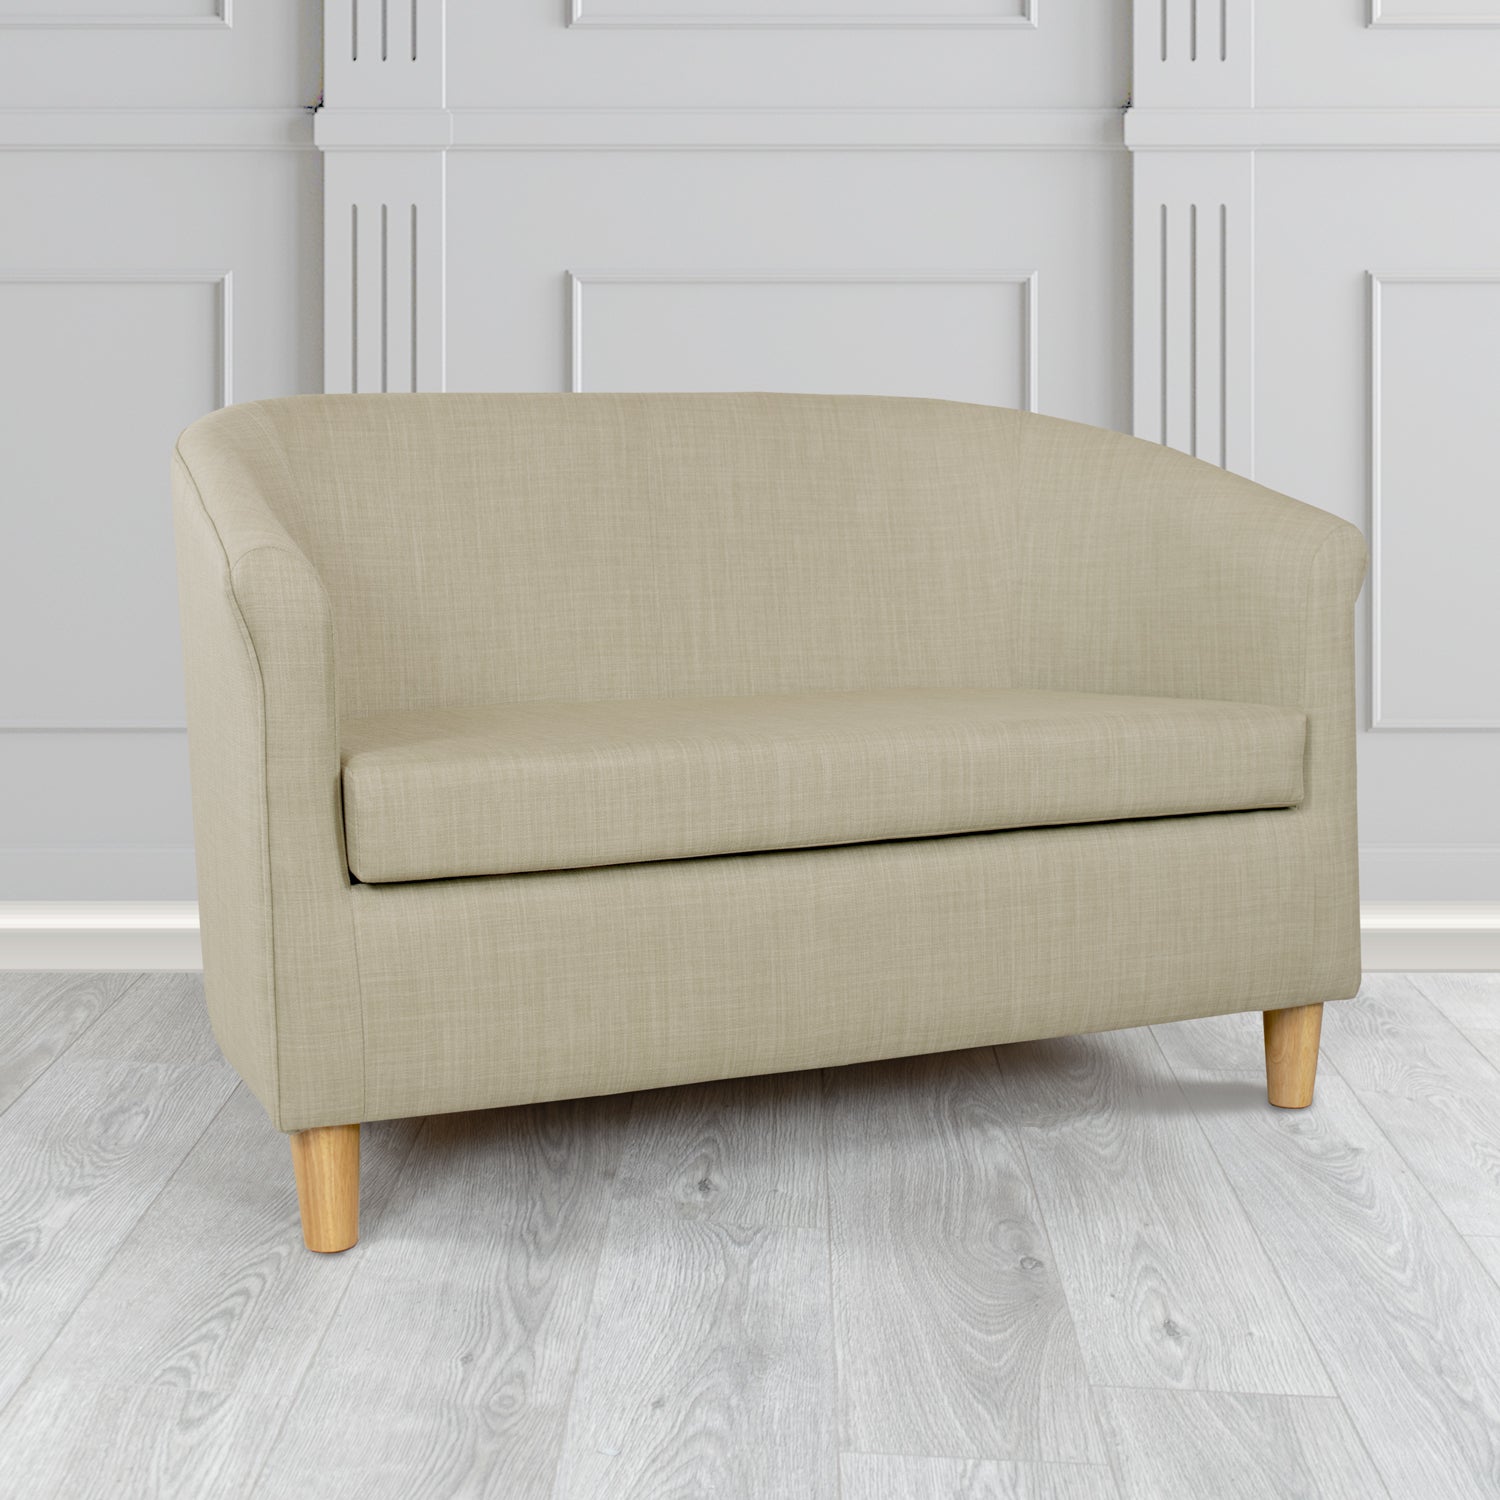 Tuscany Charles Fudge Plain Linen Fabric 2 Seater Tub Sofa - The Tub Chair Shop